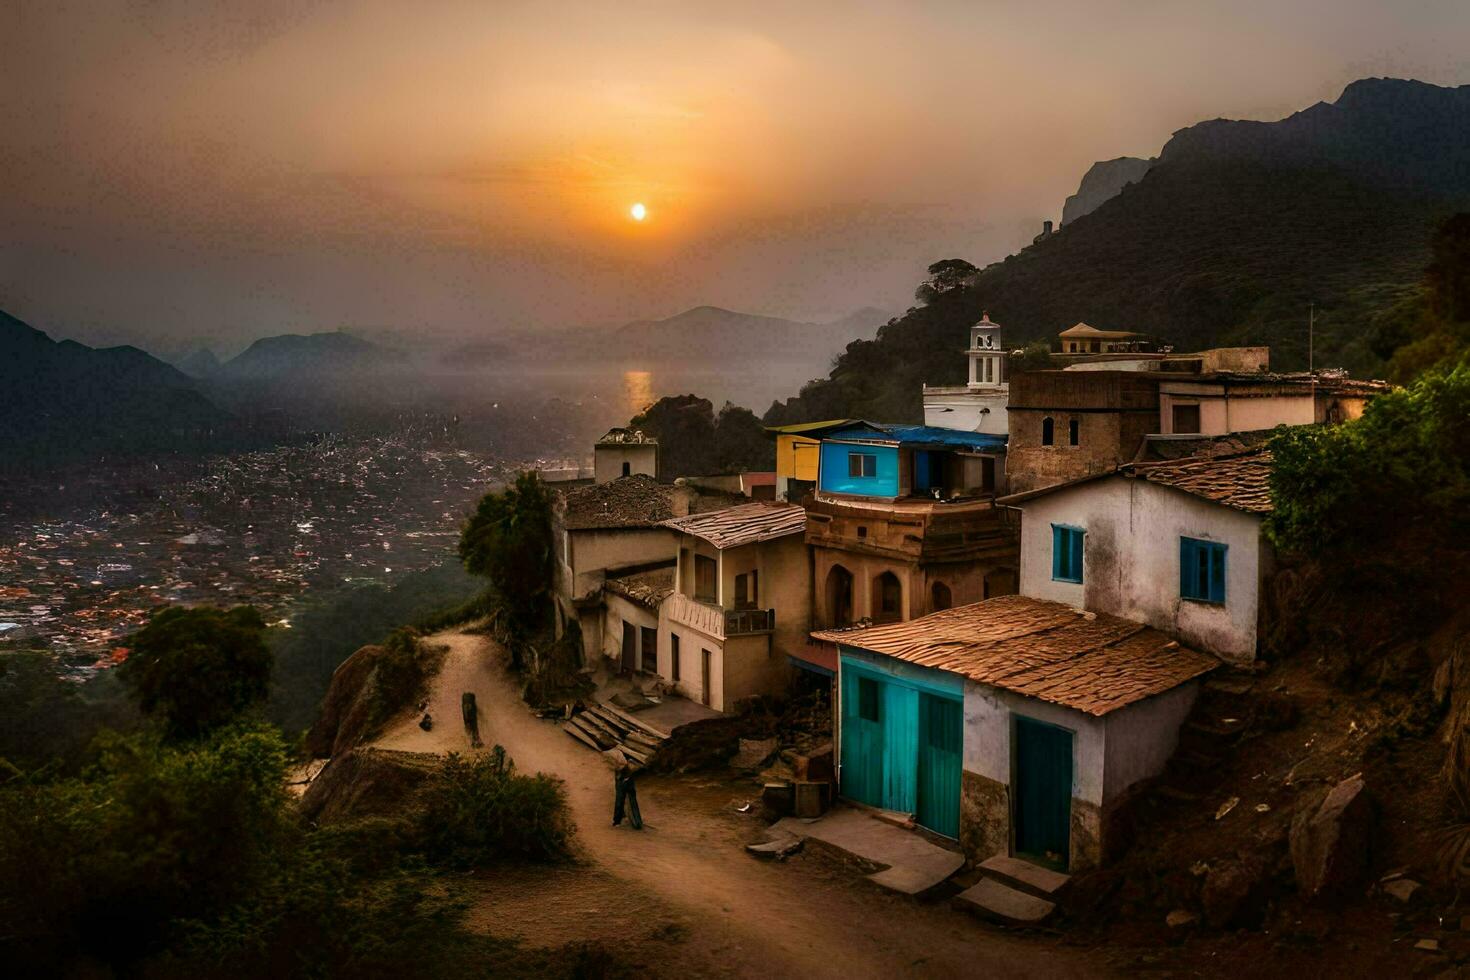 sunset over the village of kathmandu, nepal. AI-Generated photo